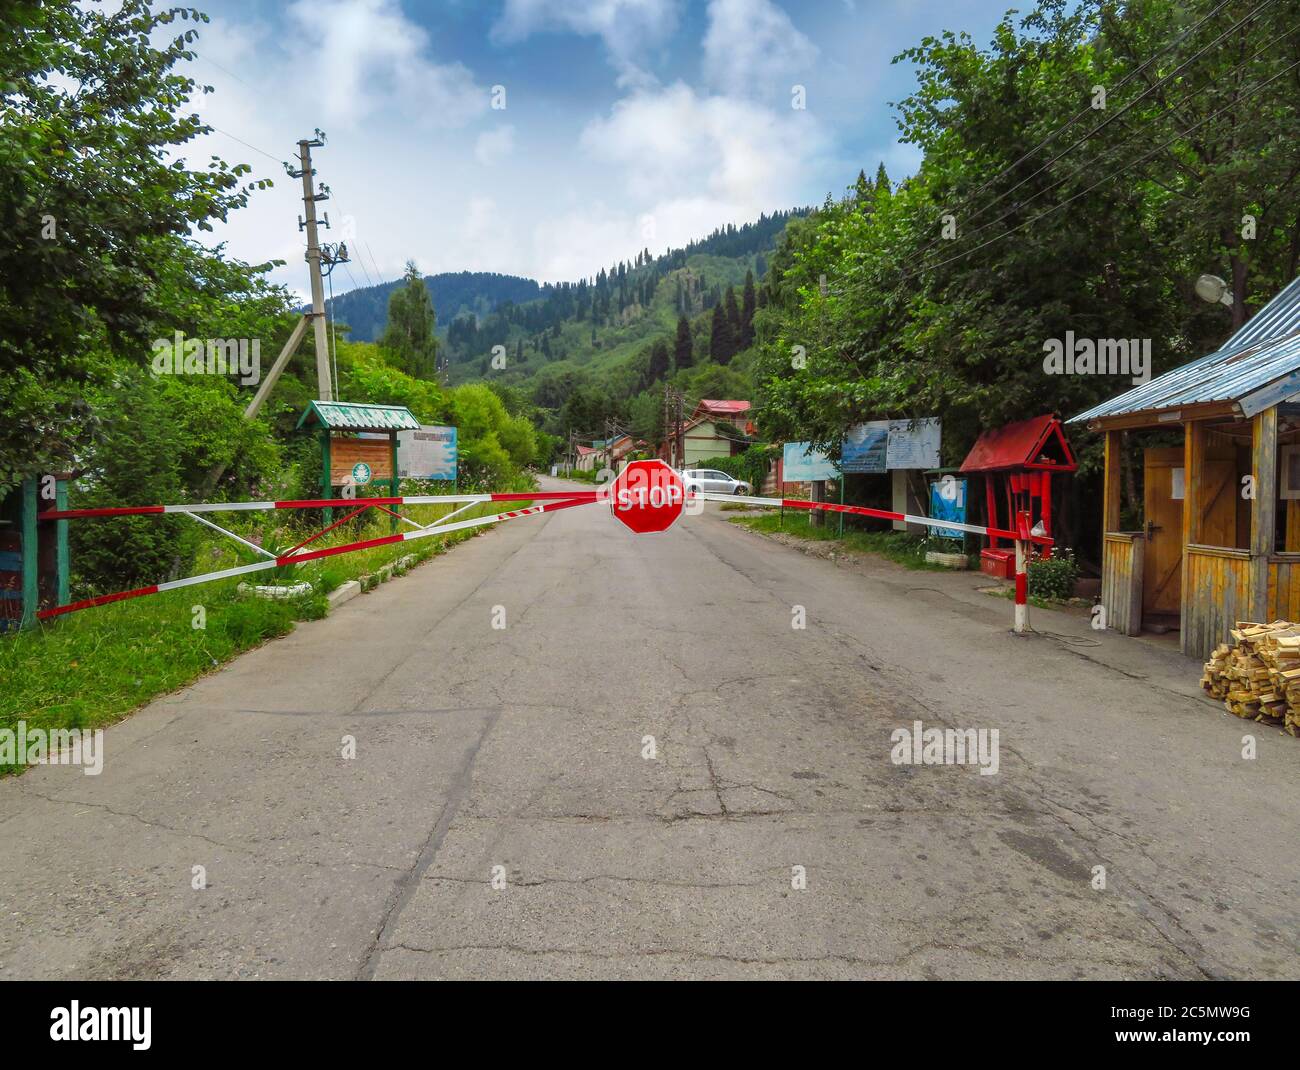 Almaty, Kazakhstan - July 17, 2017: The blockpost on the road leading to Tien Shan mountains near Almaty city, Kazakhstan Stock Photo